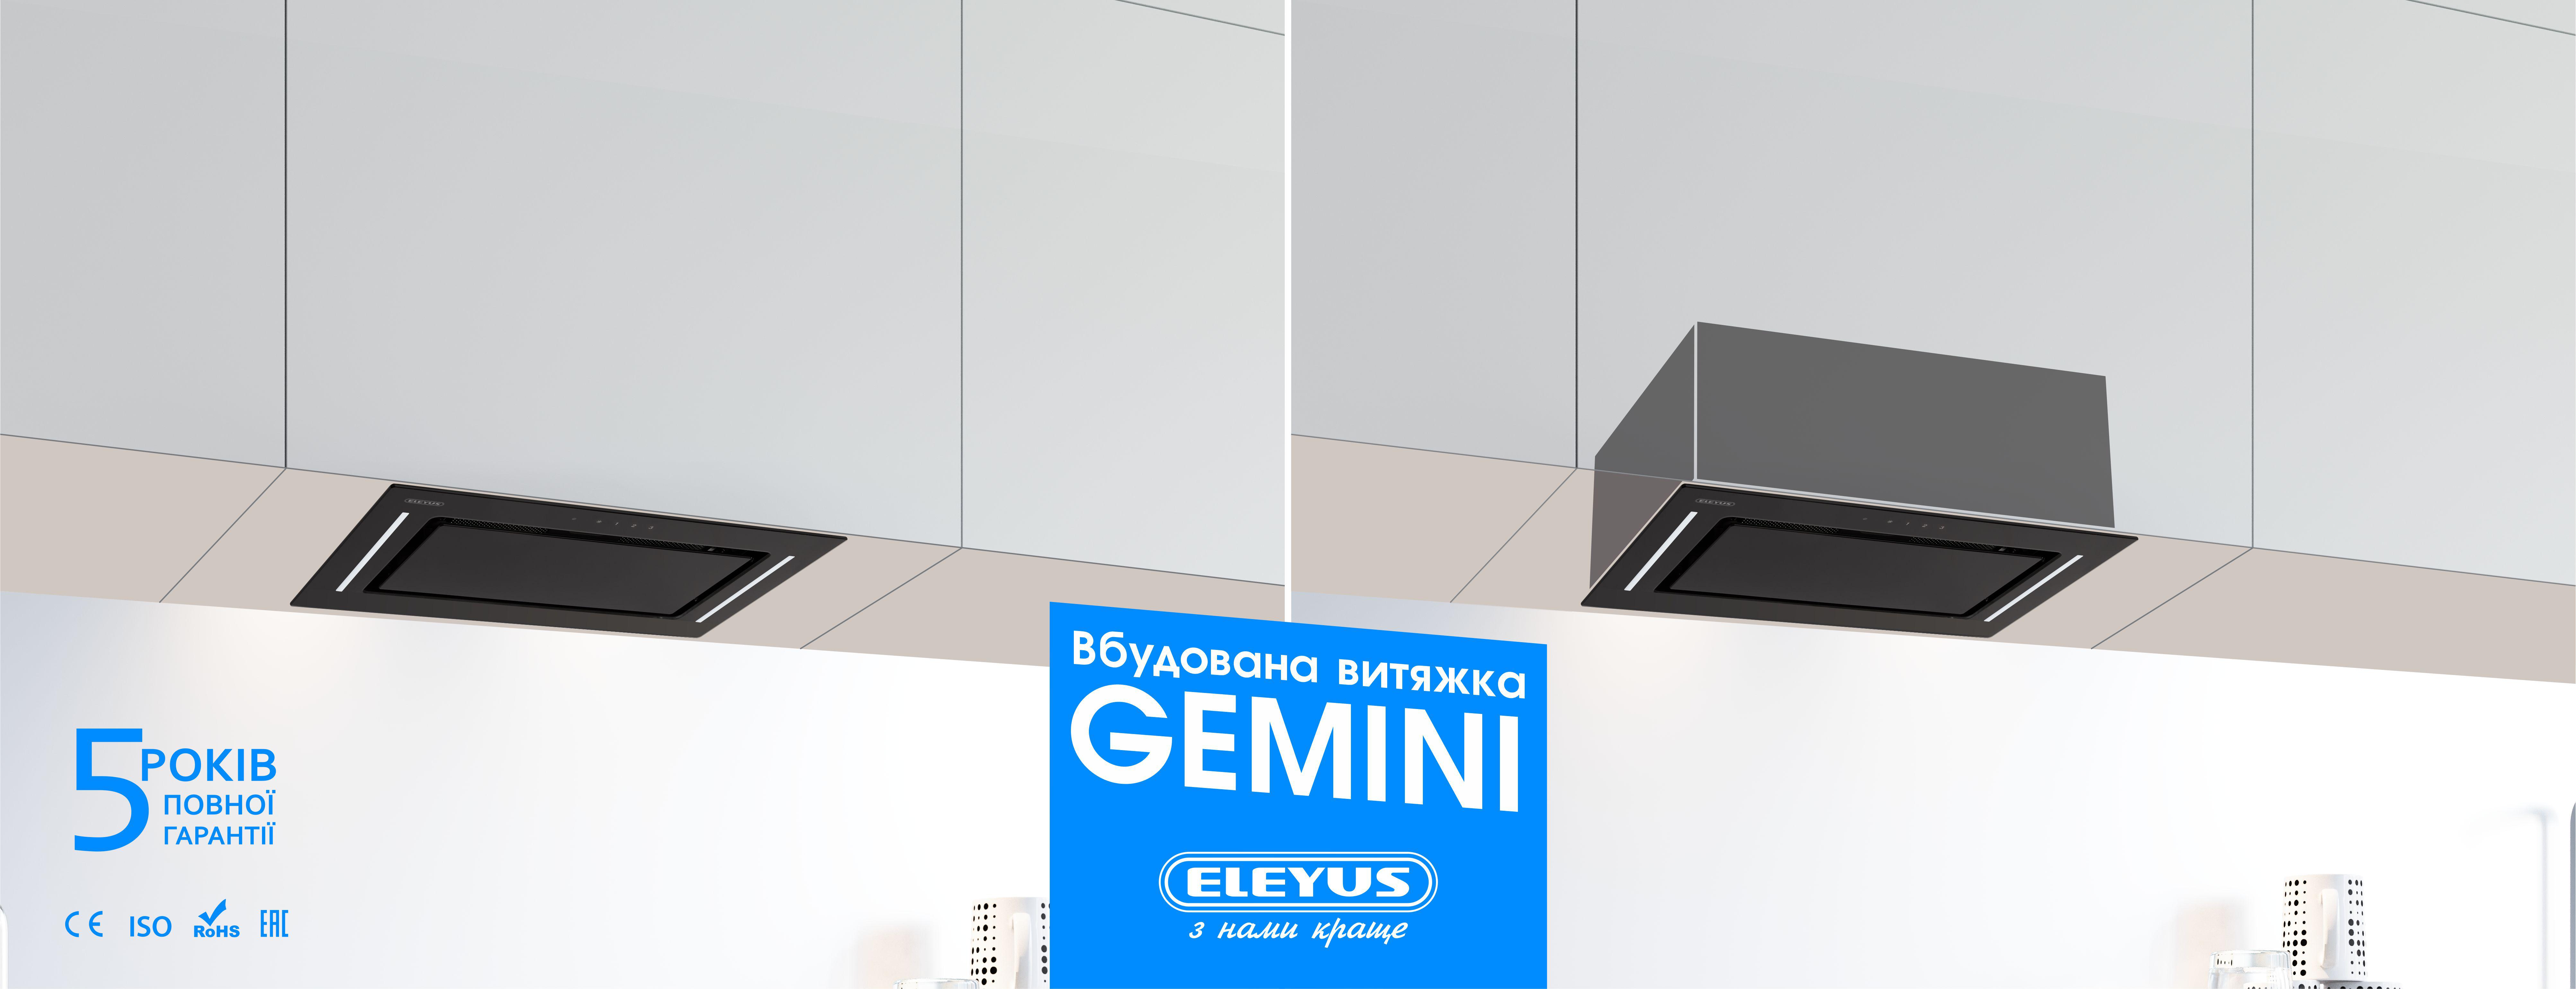 Eleyus Gemini 800 LED SMD 52 BL в магазине - фото 17